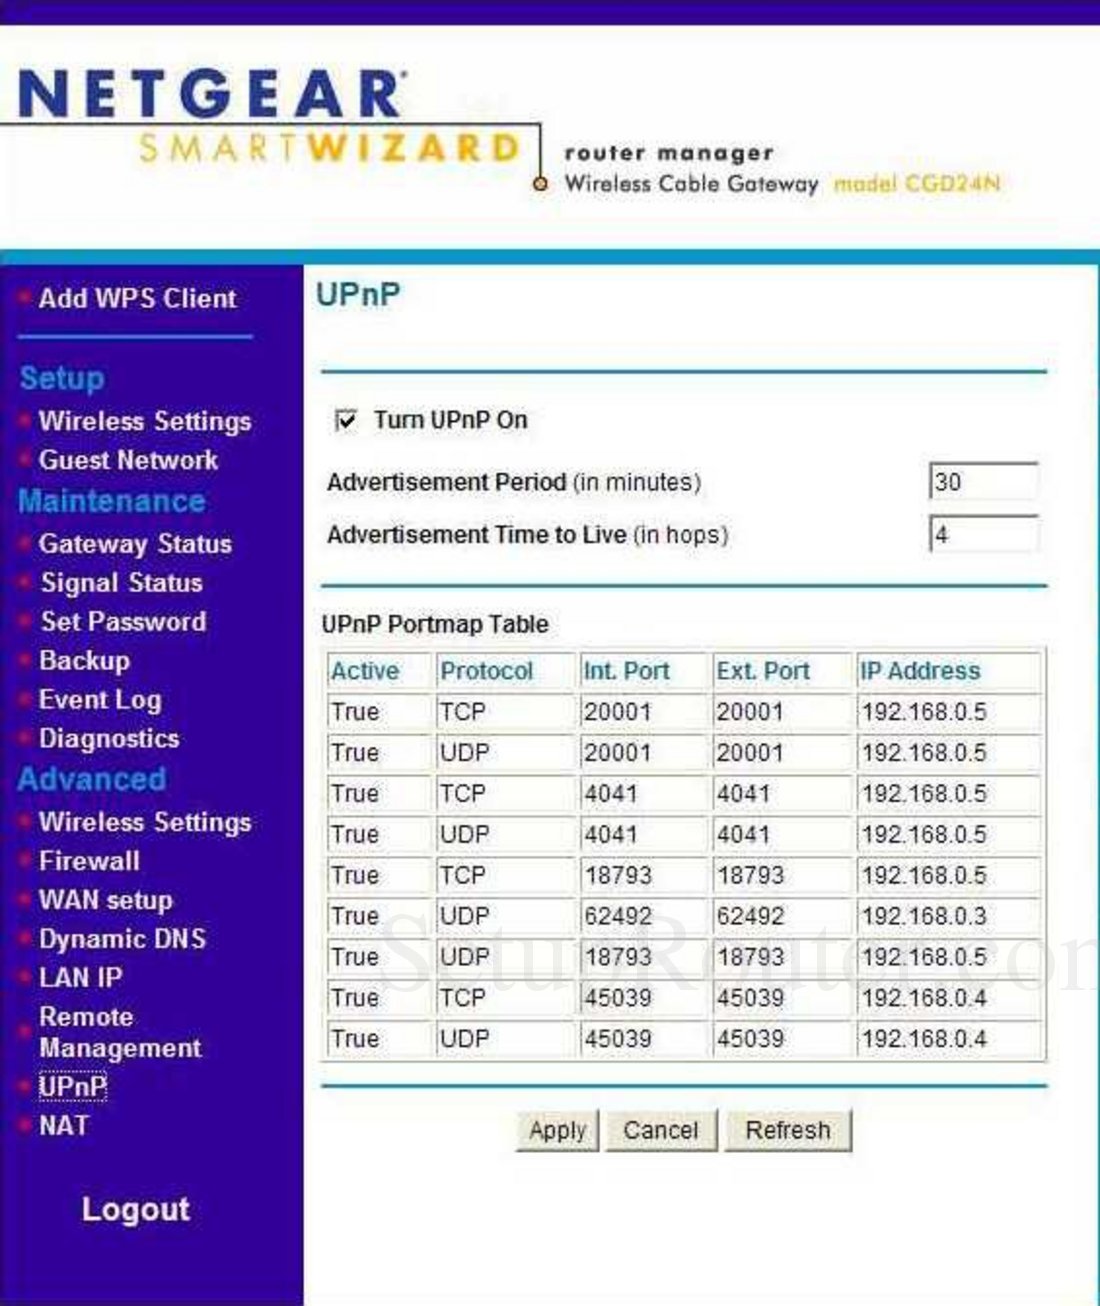 upnp or nat pmp on netgear router